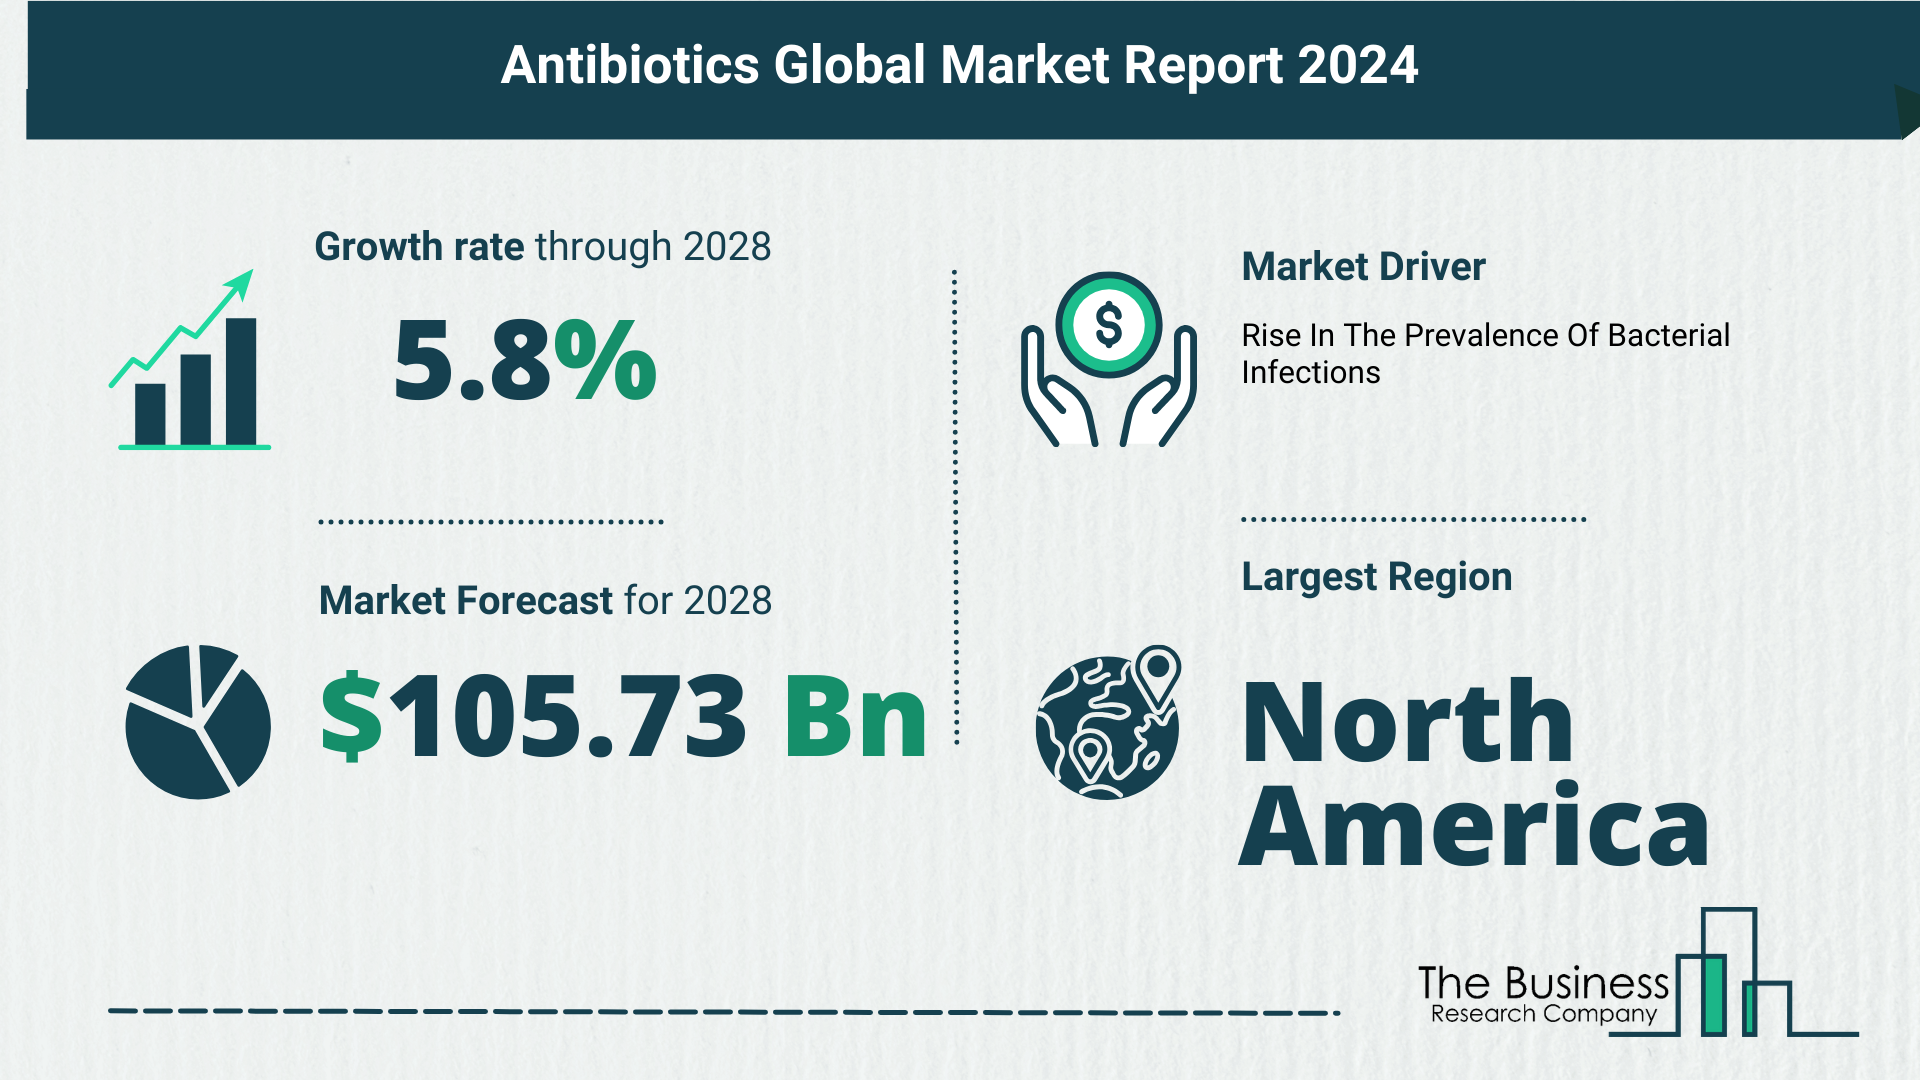 Global Antibiotics Market Analysis: Estimated Market Size And Growth Rate